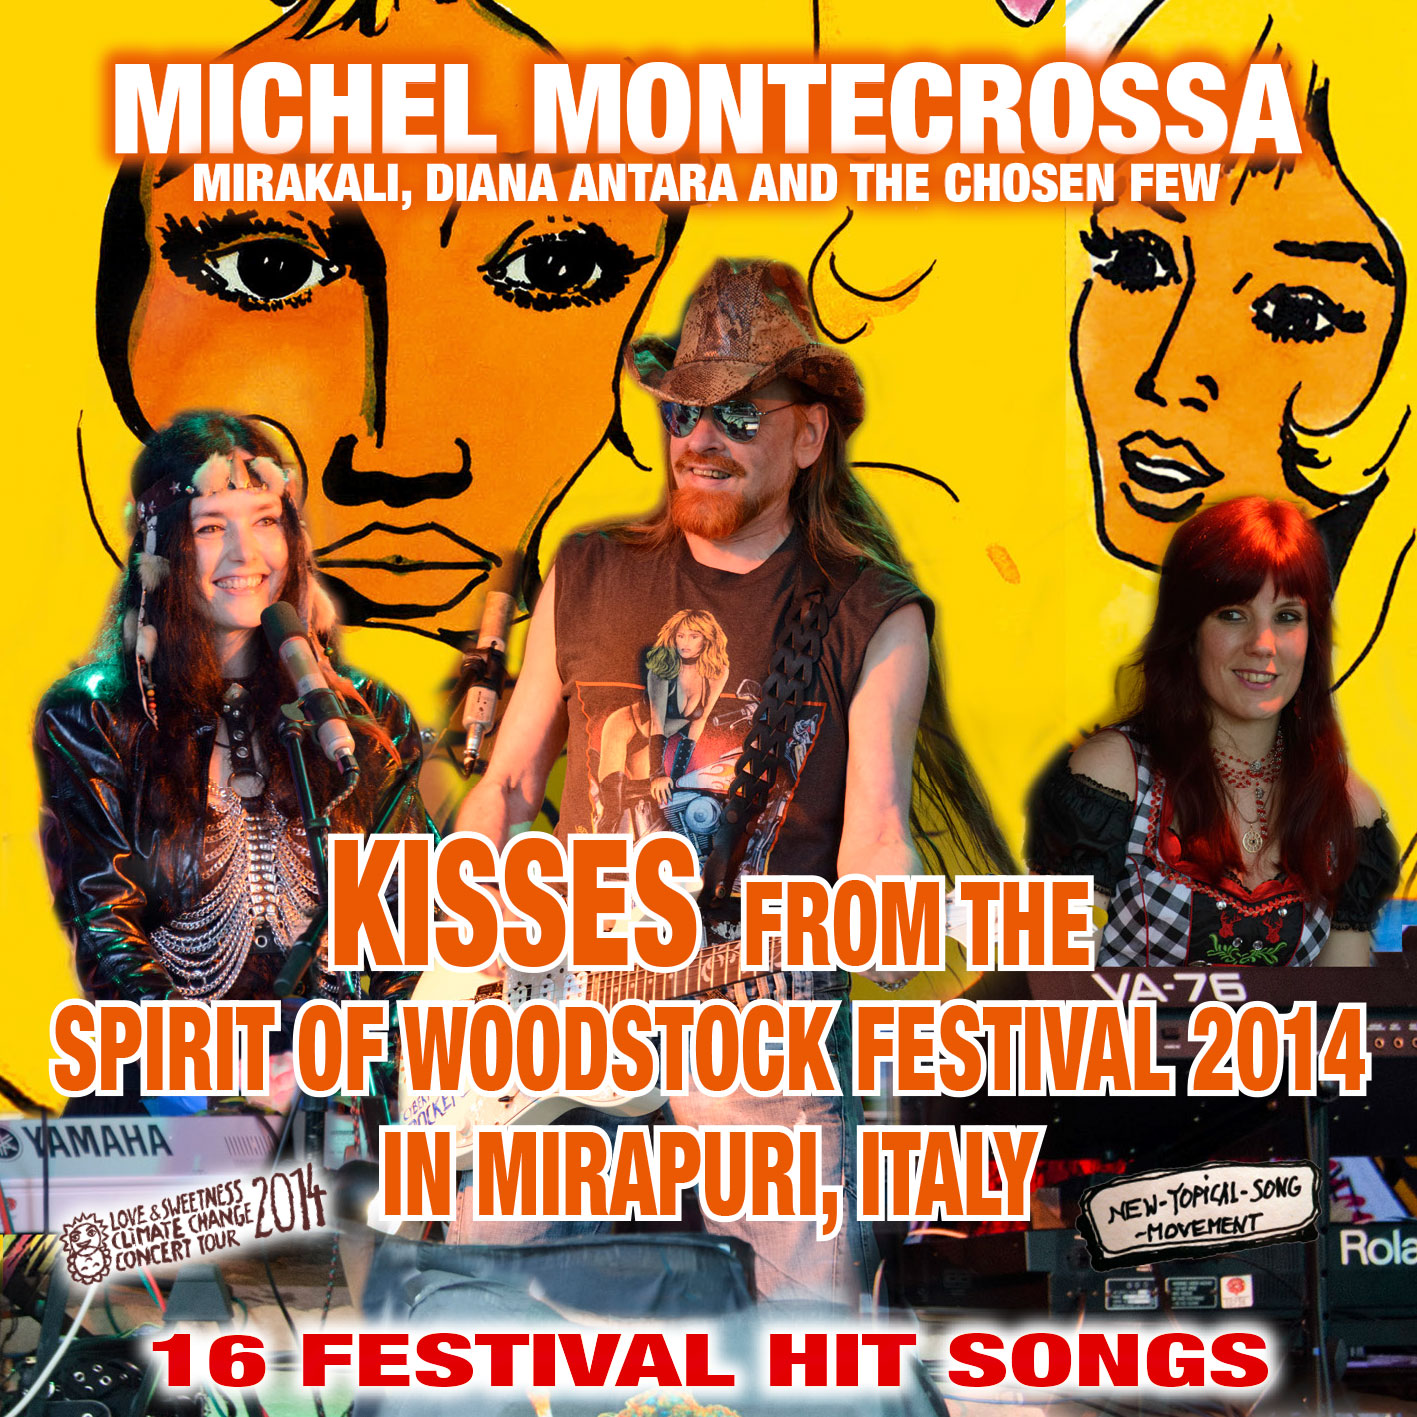 Kisses from the Spirit of Woodstock Festival in Mirapuri, Italy